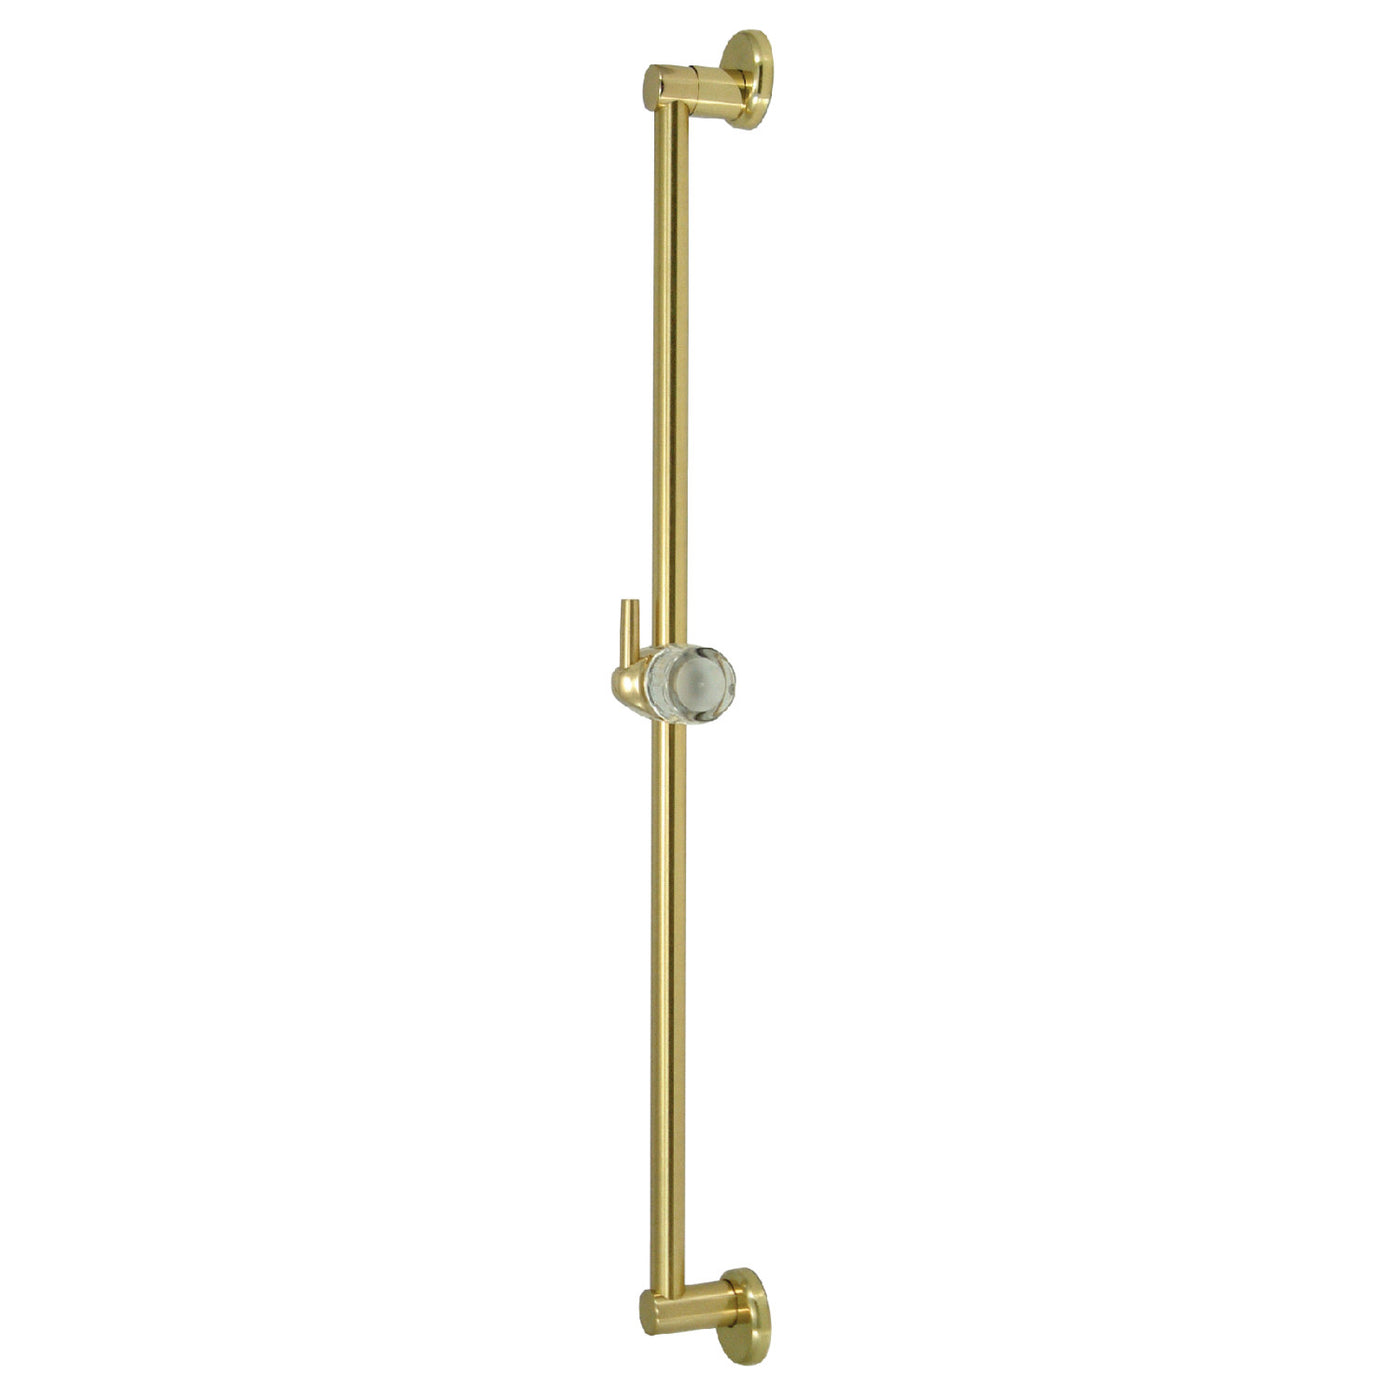 Elements of Design DK180A2 24-Inch Shower Slide Bar with Pin Mount Hook, Polished Brass